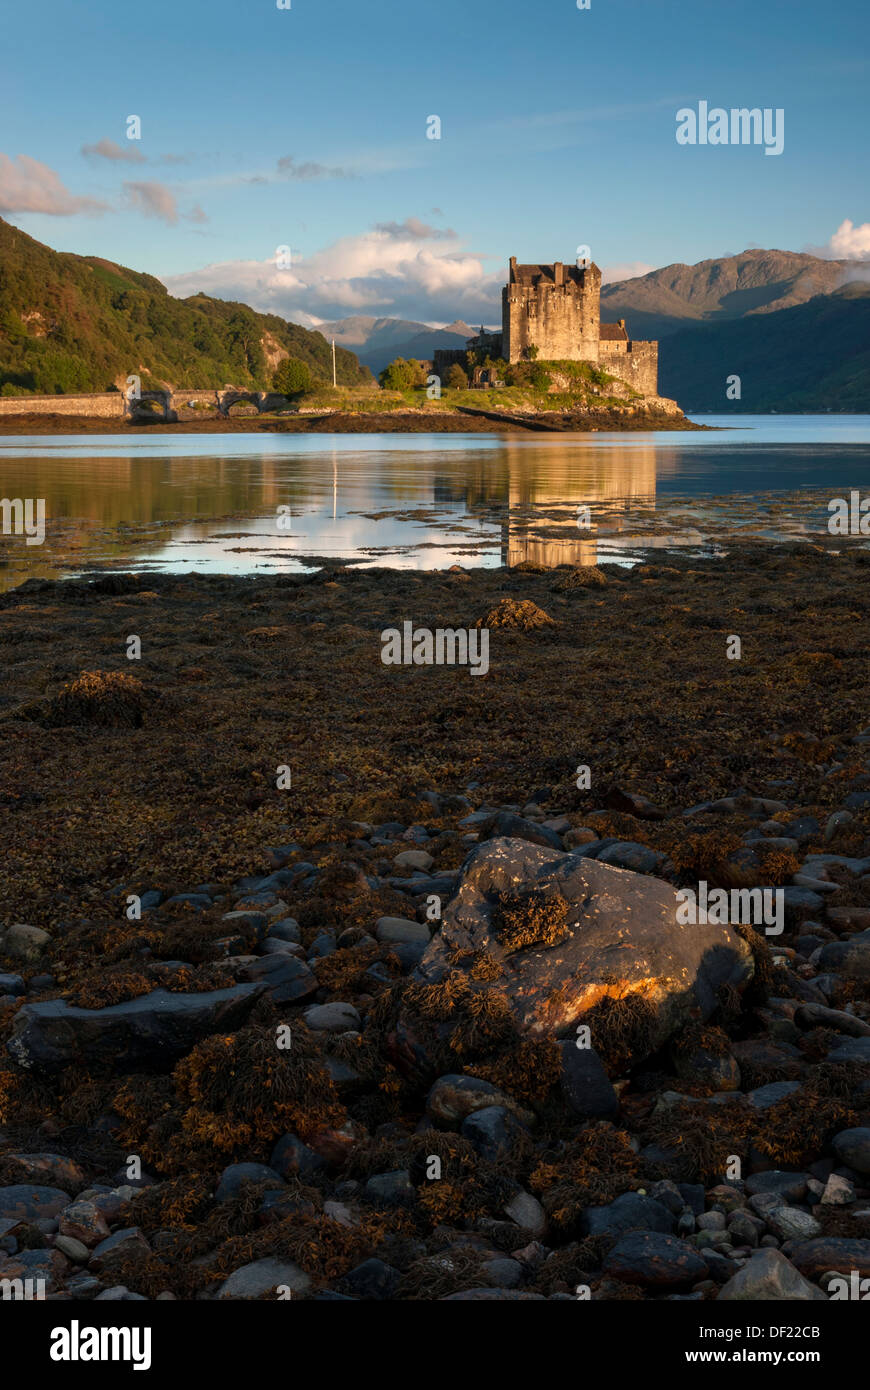 Early evening at Eilean Donan Castle Loch Alsh Scotland UK. Stock Photo